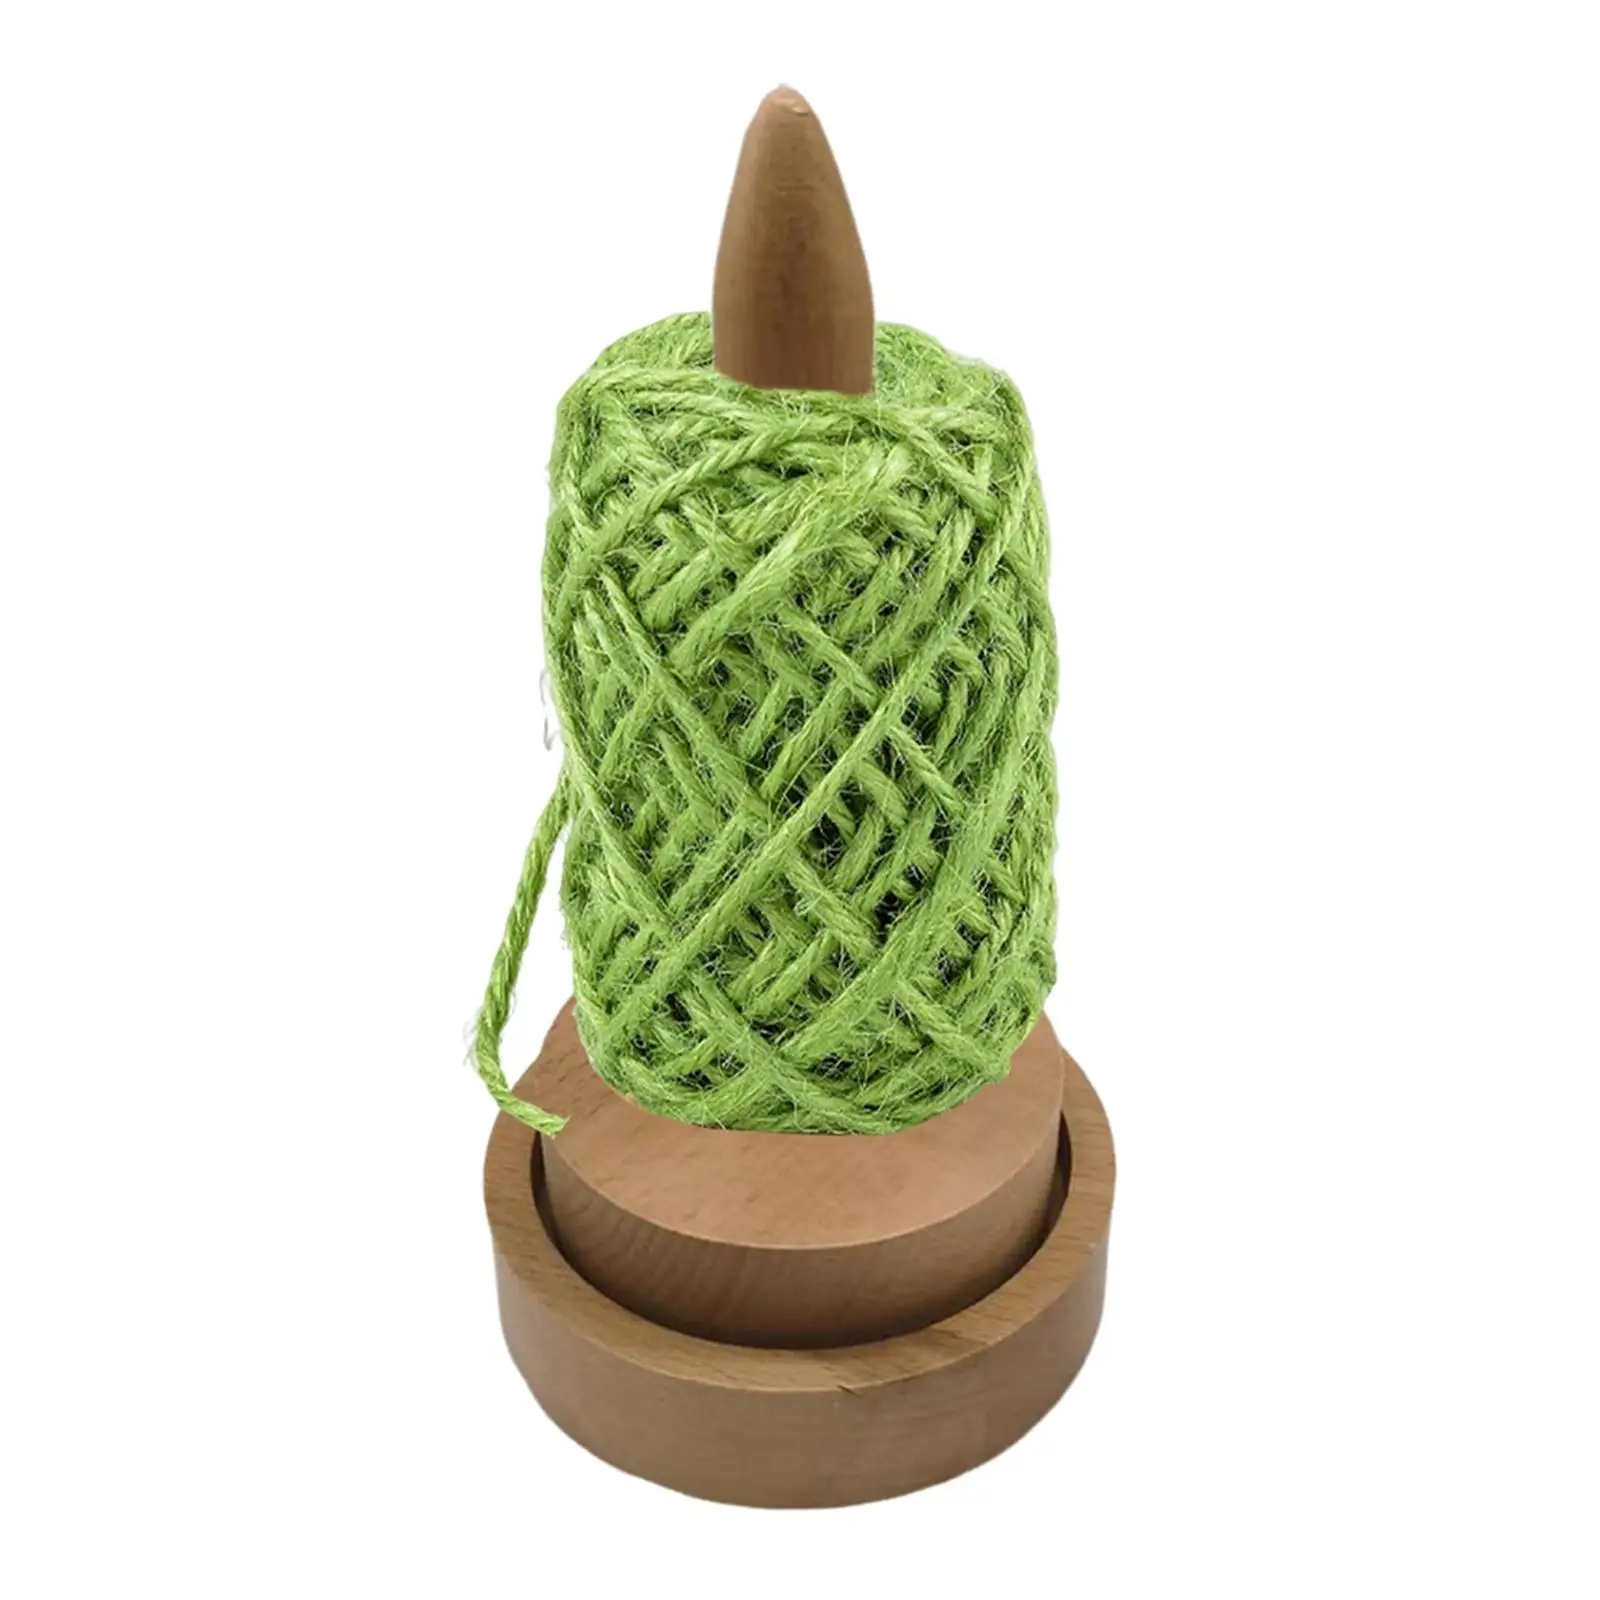 Wooden Yarn Storage for Crocheting Knitting Knitting & Crochet Supplies Bobbin Stand Sewing Thread Organizer Rack Yarn Dispenser